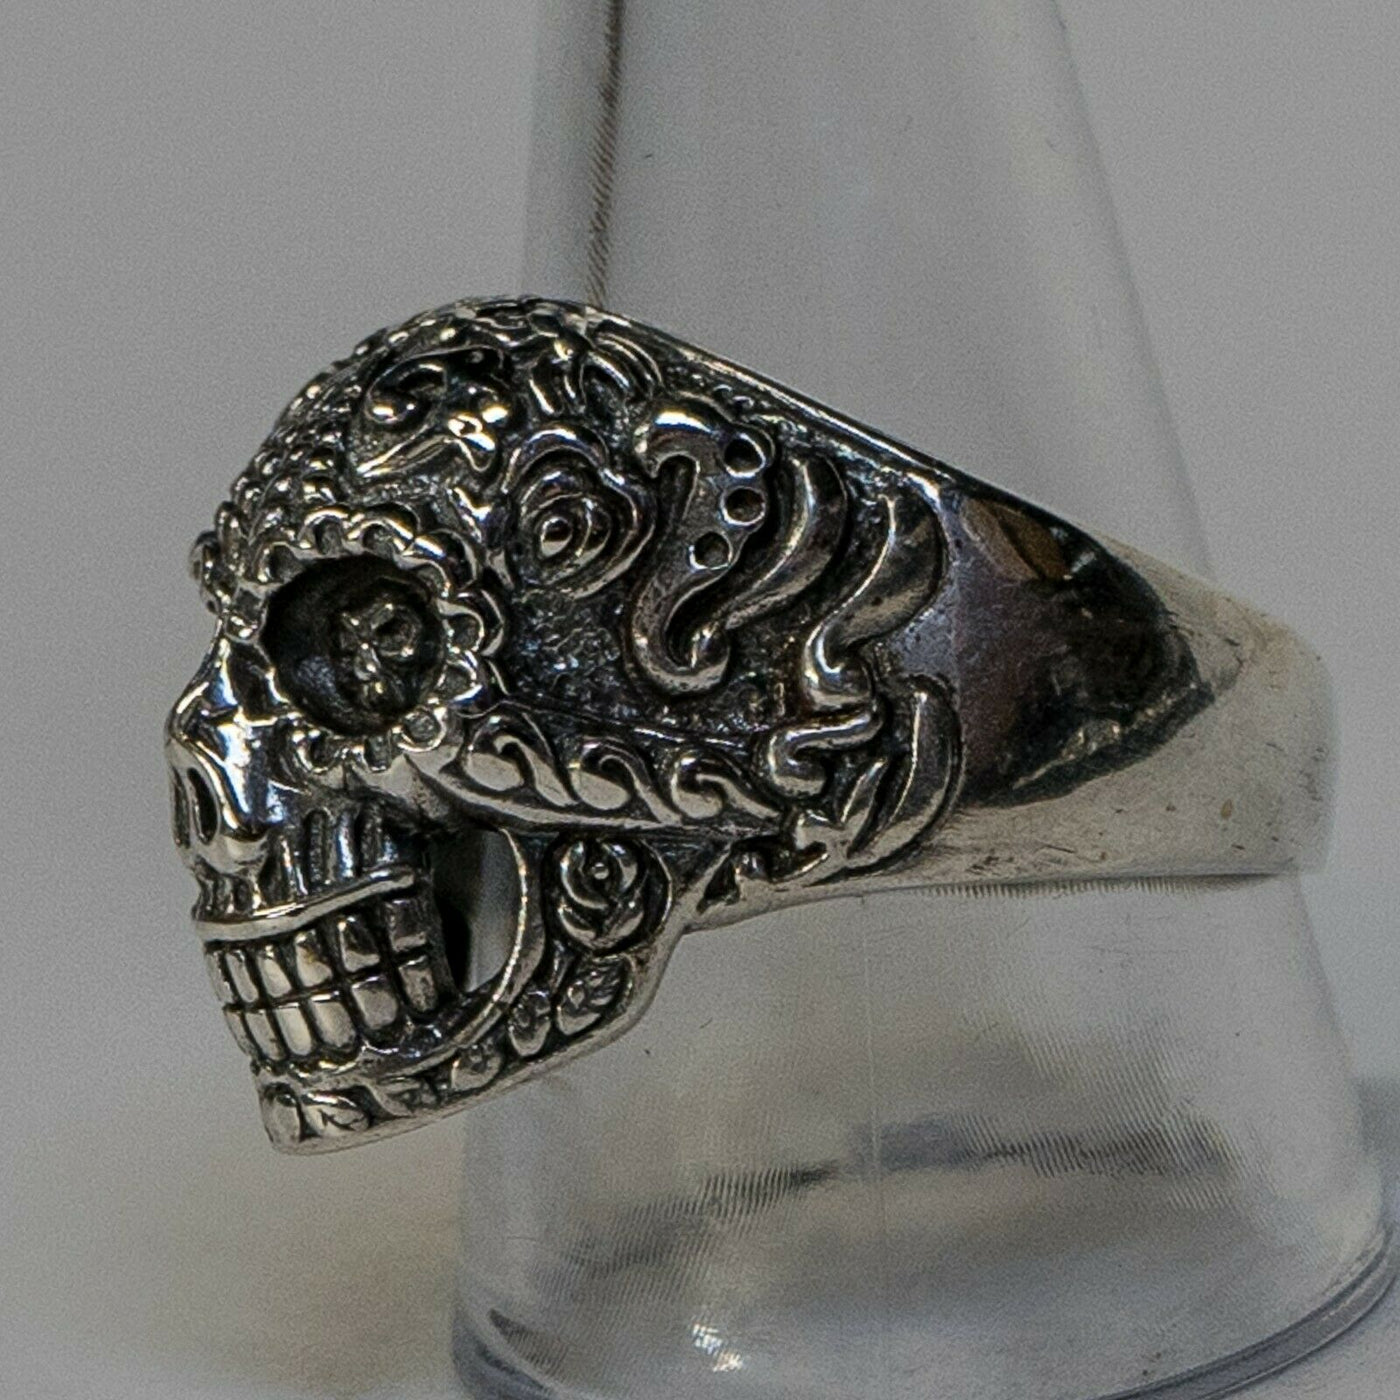 Candy/Sugar Skull Ring - .925 sterling silver